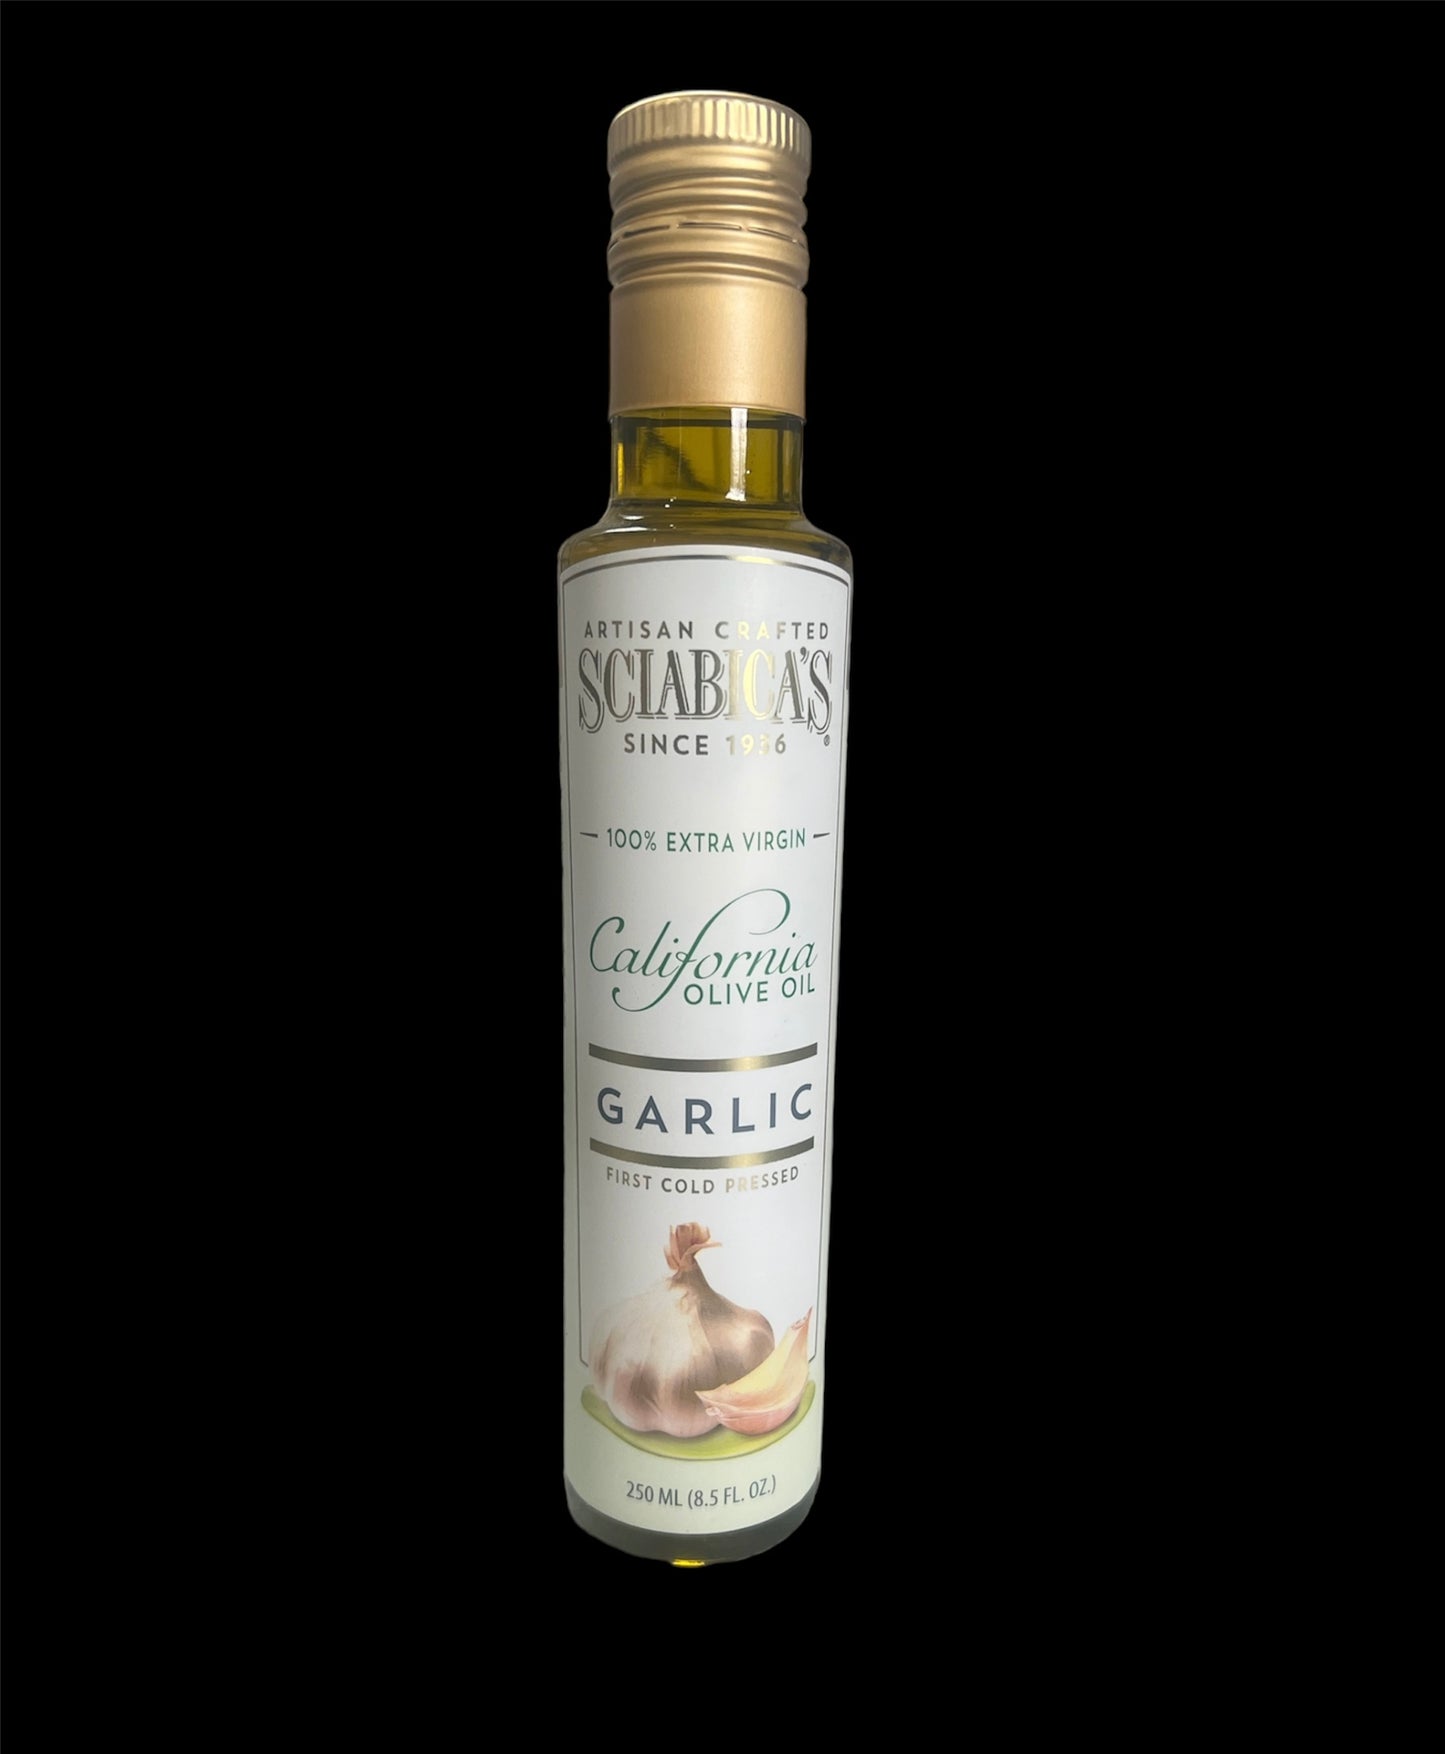 Sciabicas Garlic Olive Oil